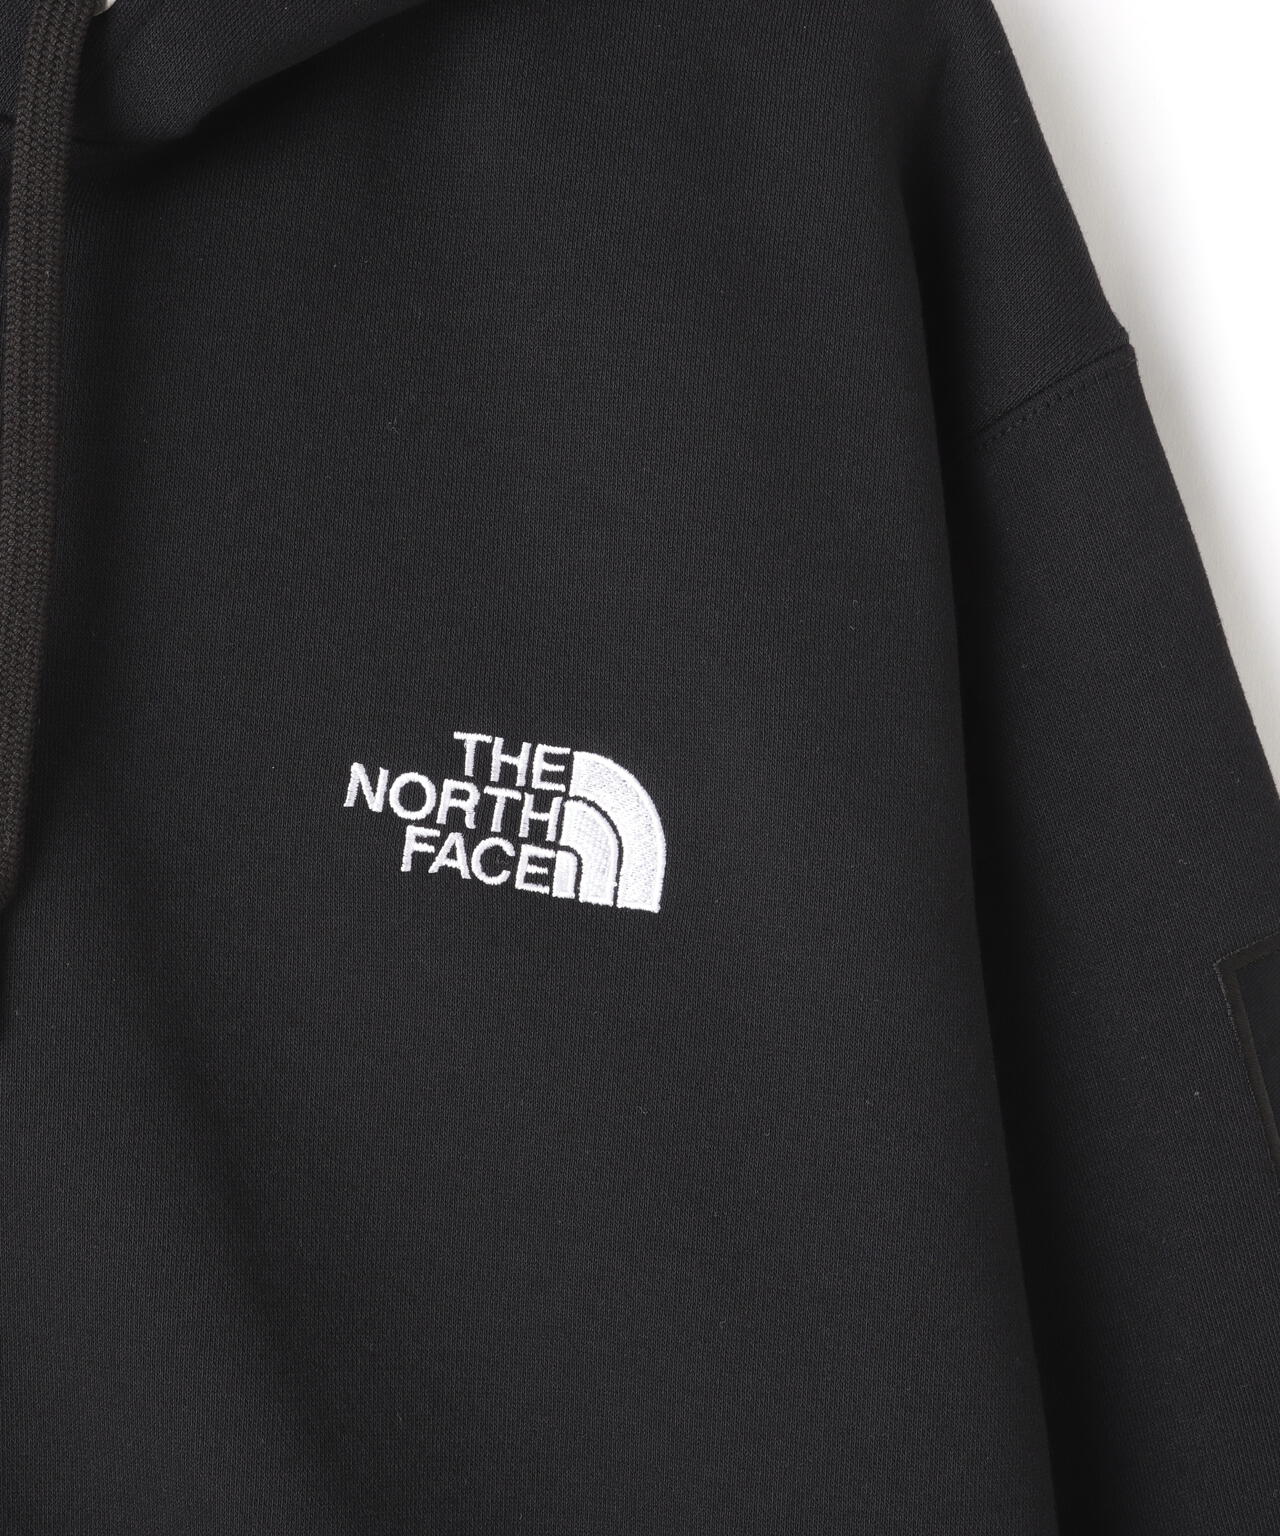 THE NORTH FACE/ザ・ノースフェイス/Square Logo Full Zip/スクエア